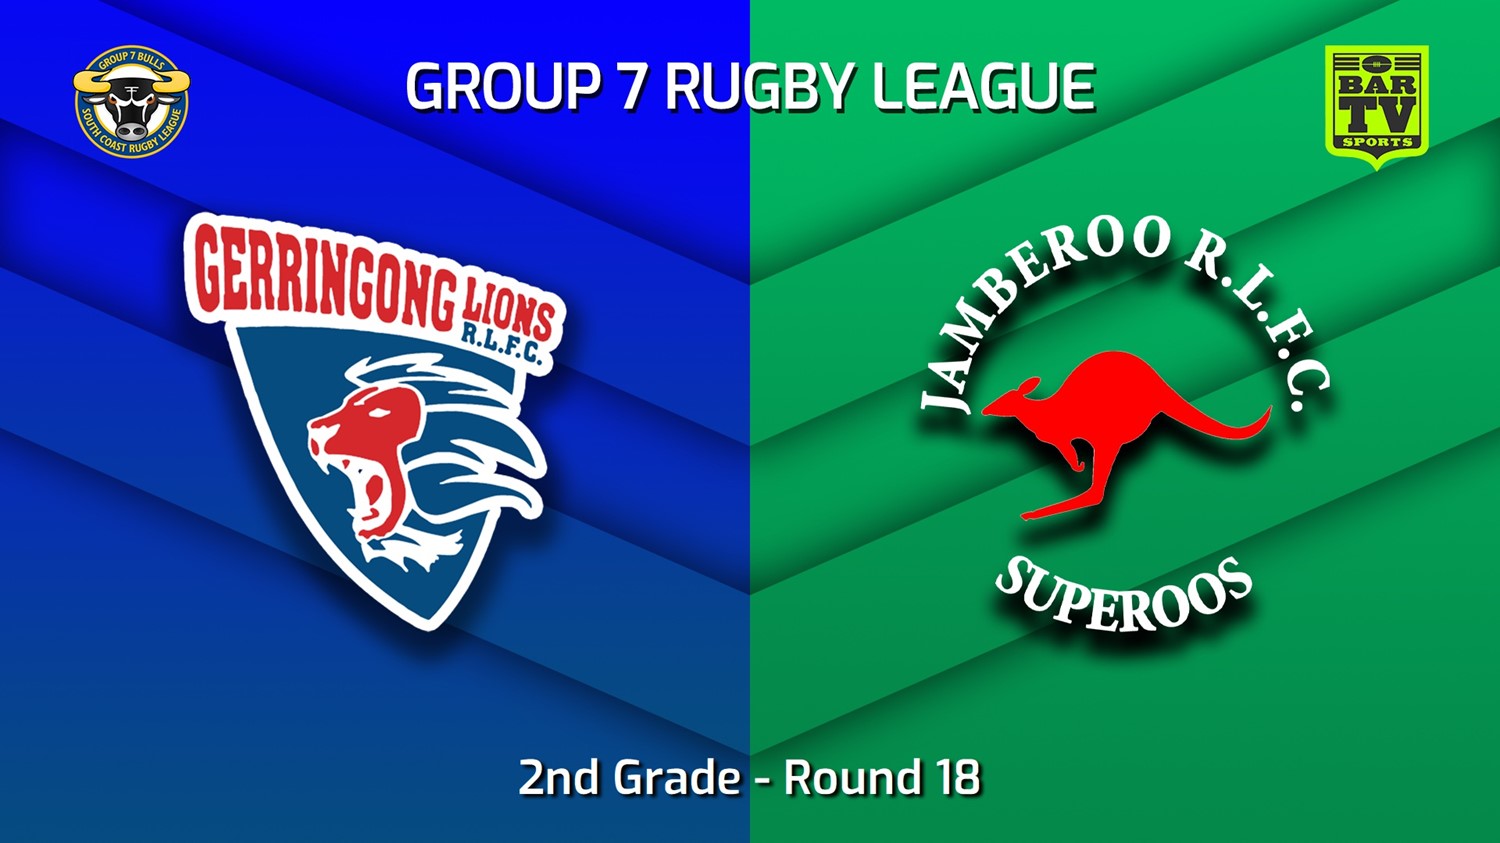 230819-South Coast Round 18 - 2nd Grade - Gerringong Lions v Jamberoo Superoos Slate Image